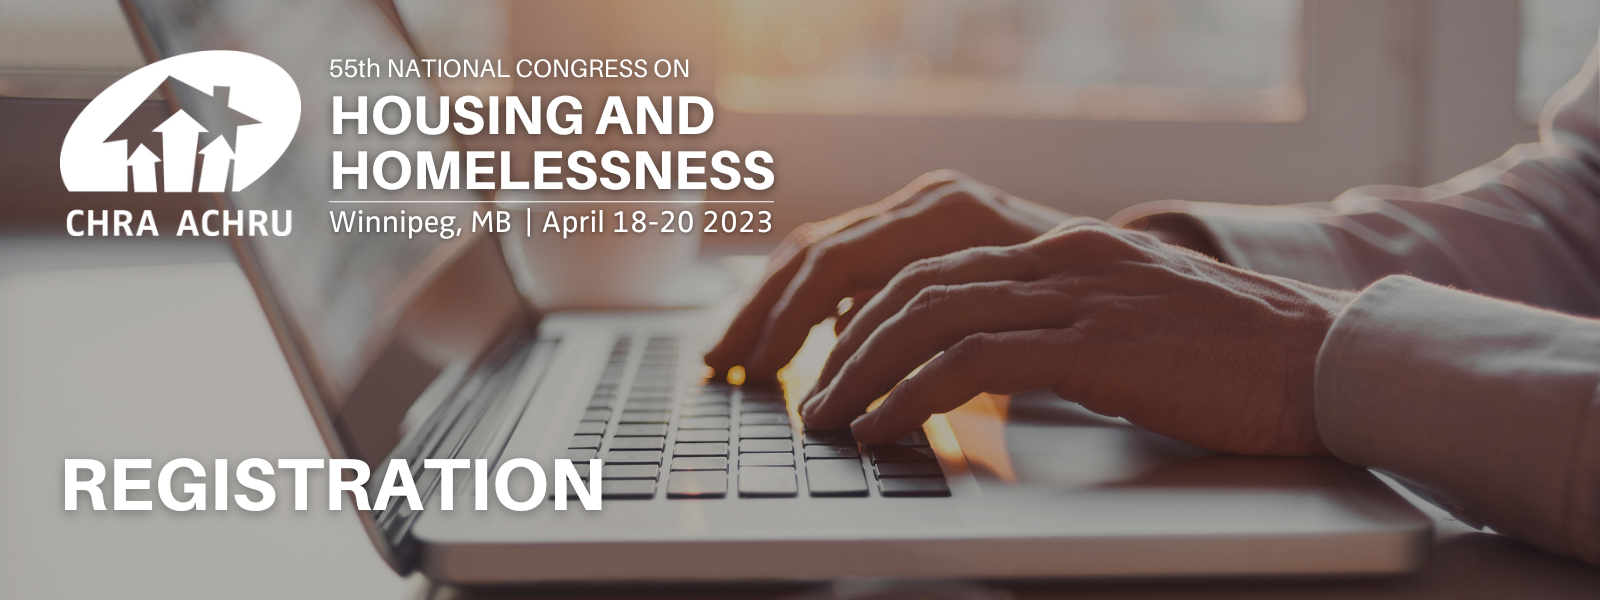 Congress 2023 Registration page_banner